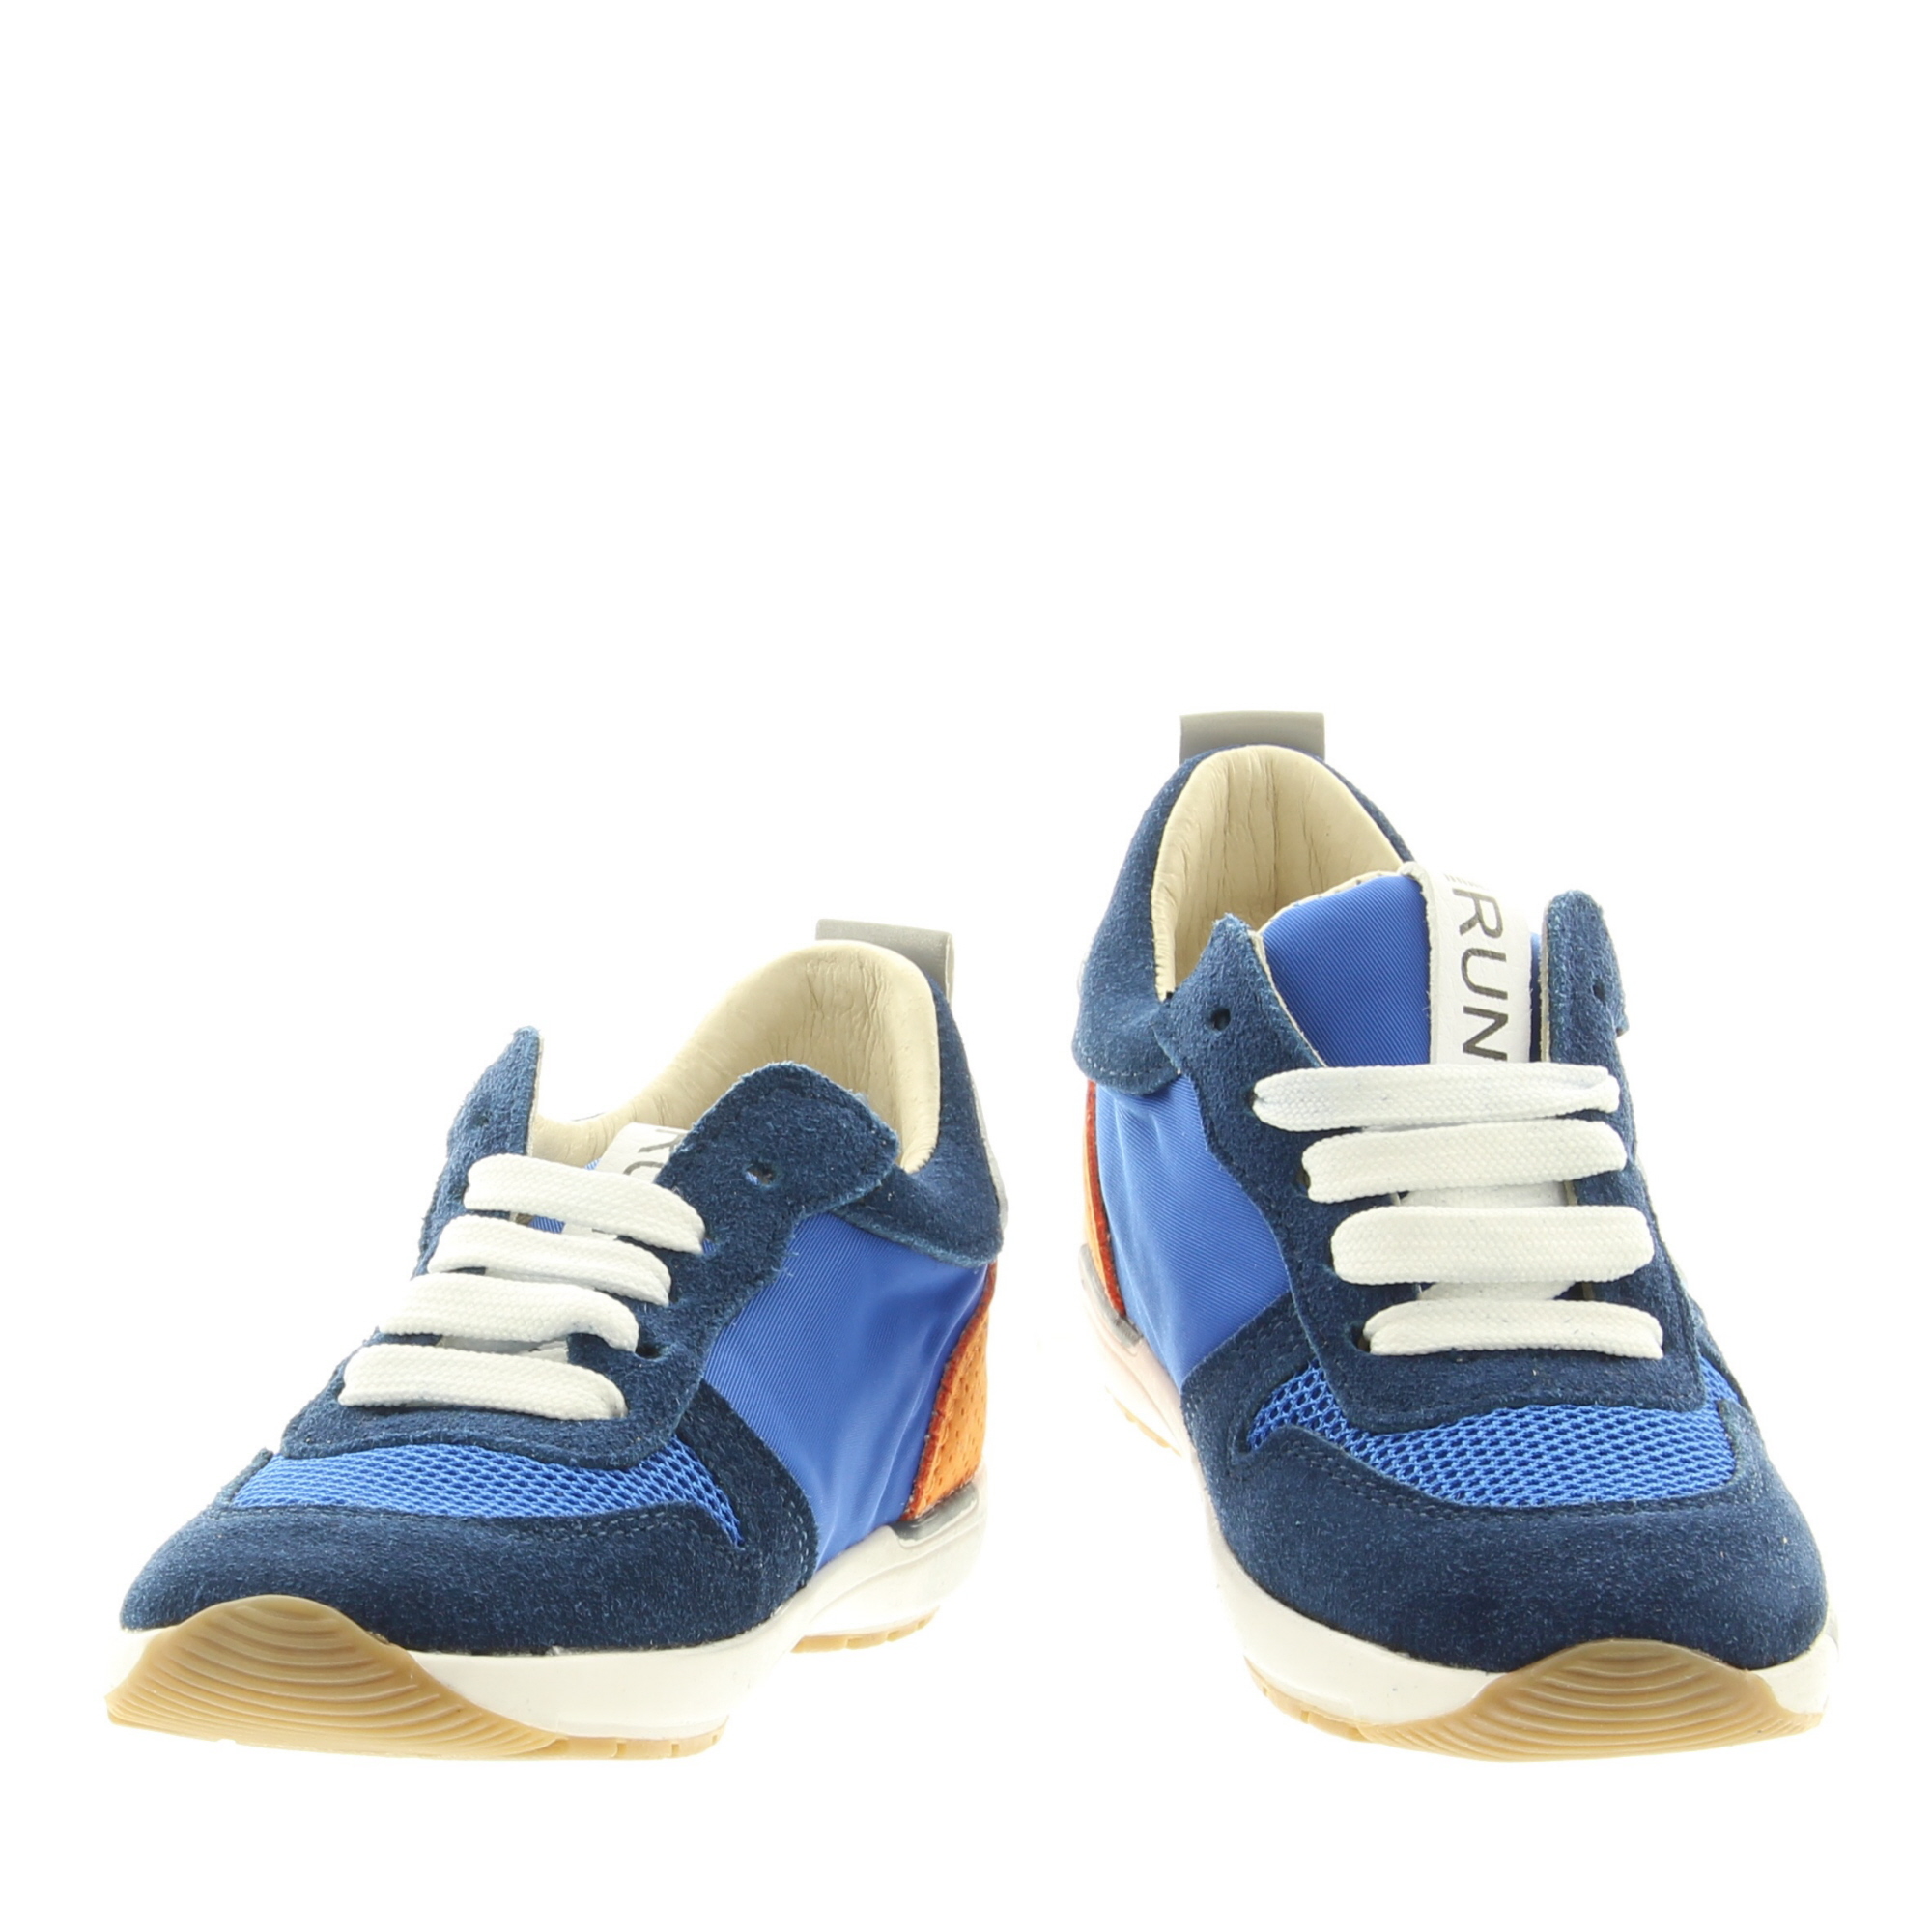 ShoesMe RF24S047-A Blue Orange